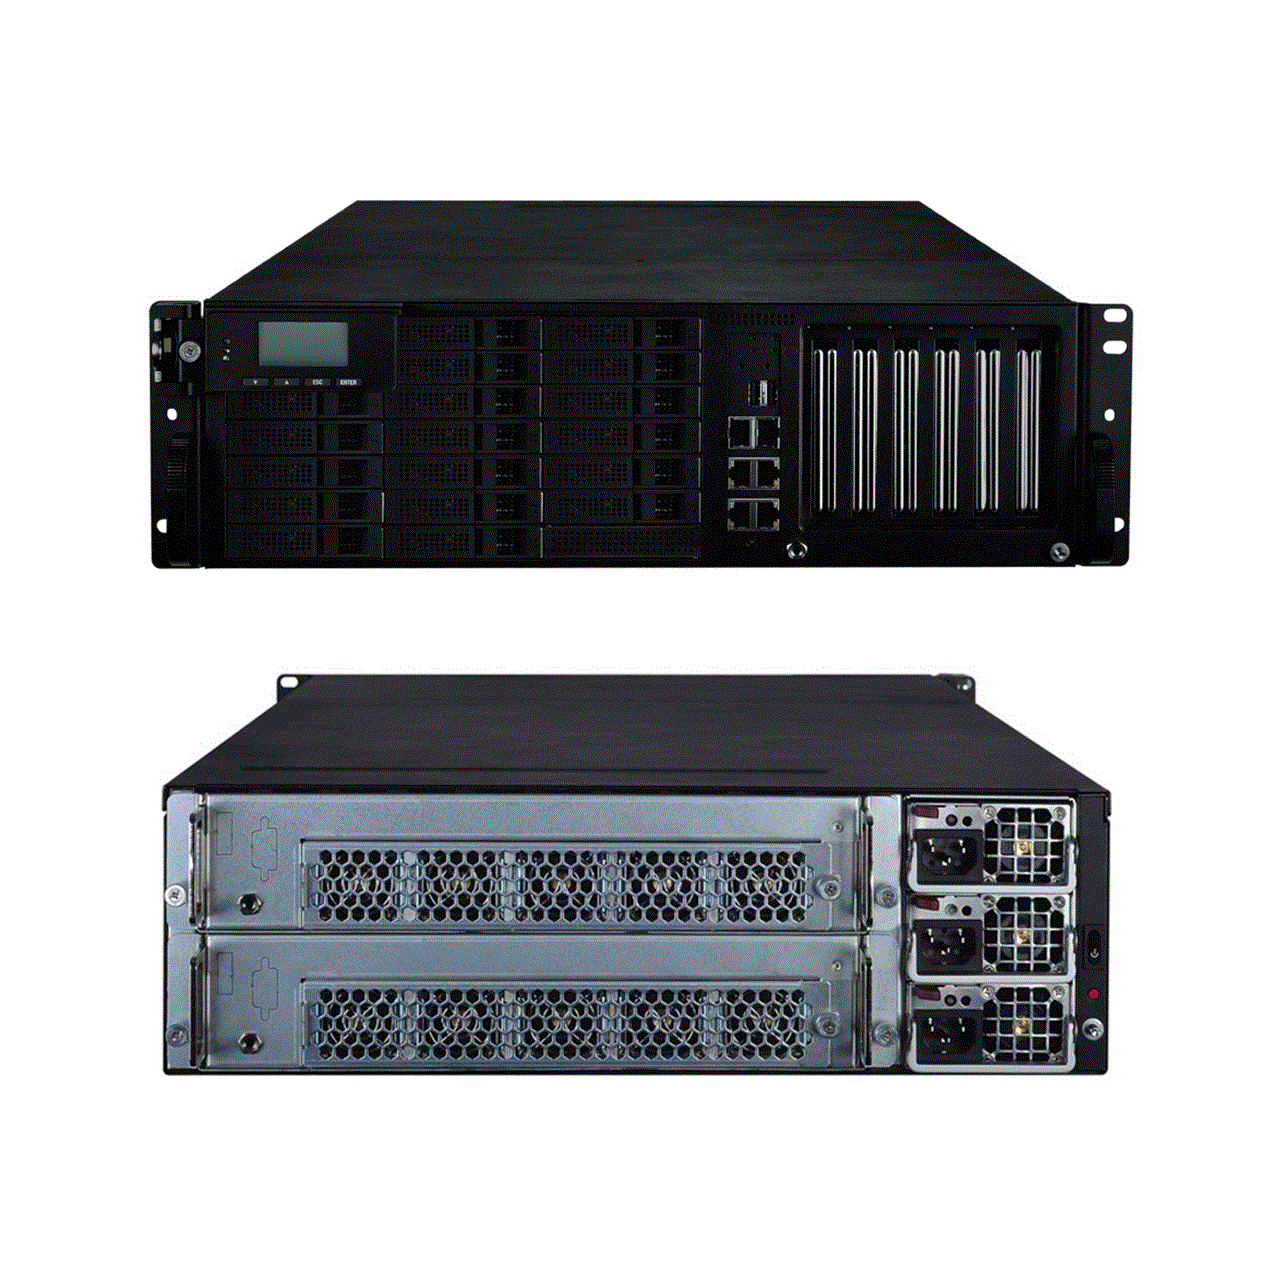 3u-cloud-storage-gateway-with-4-intela-xeona-e5-2600-series-cpus